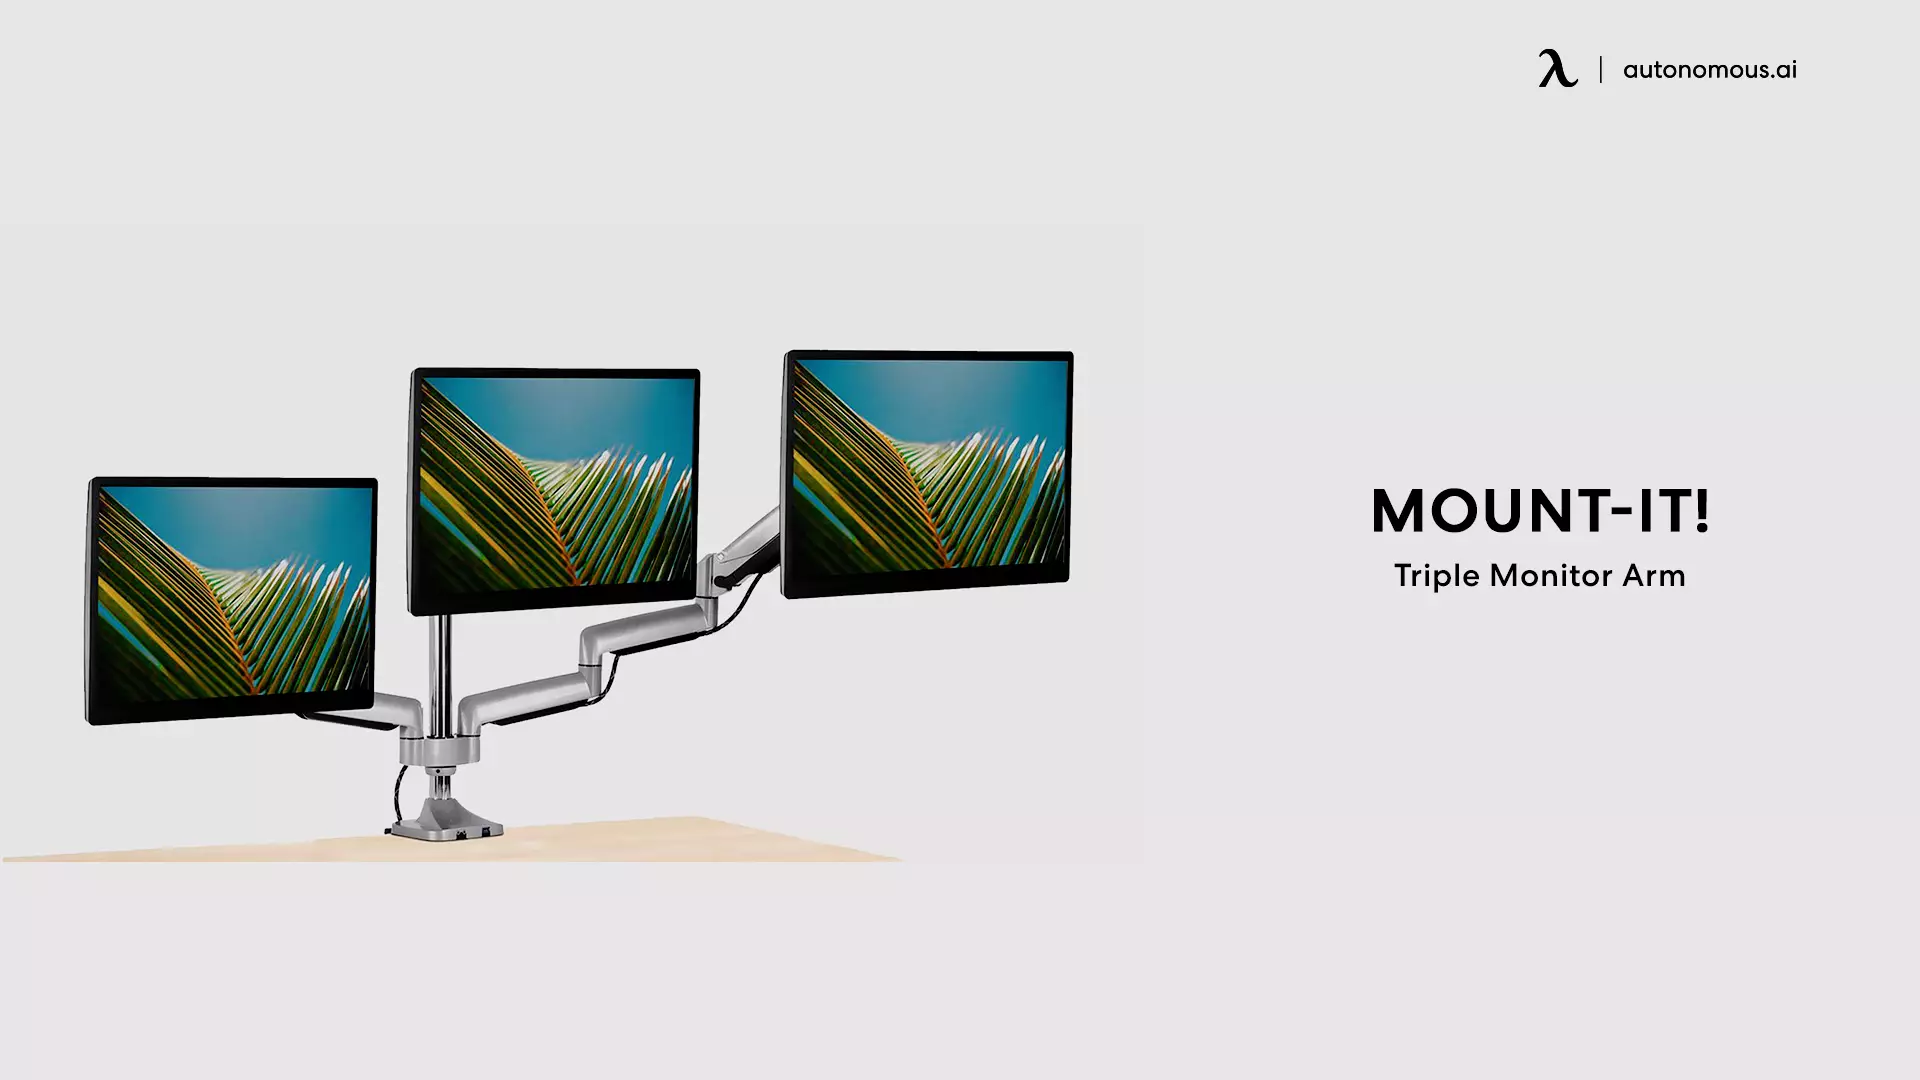 Triple Monitor Arm by Mount-It!